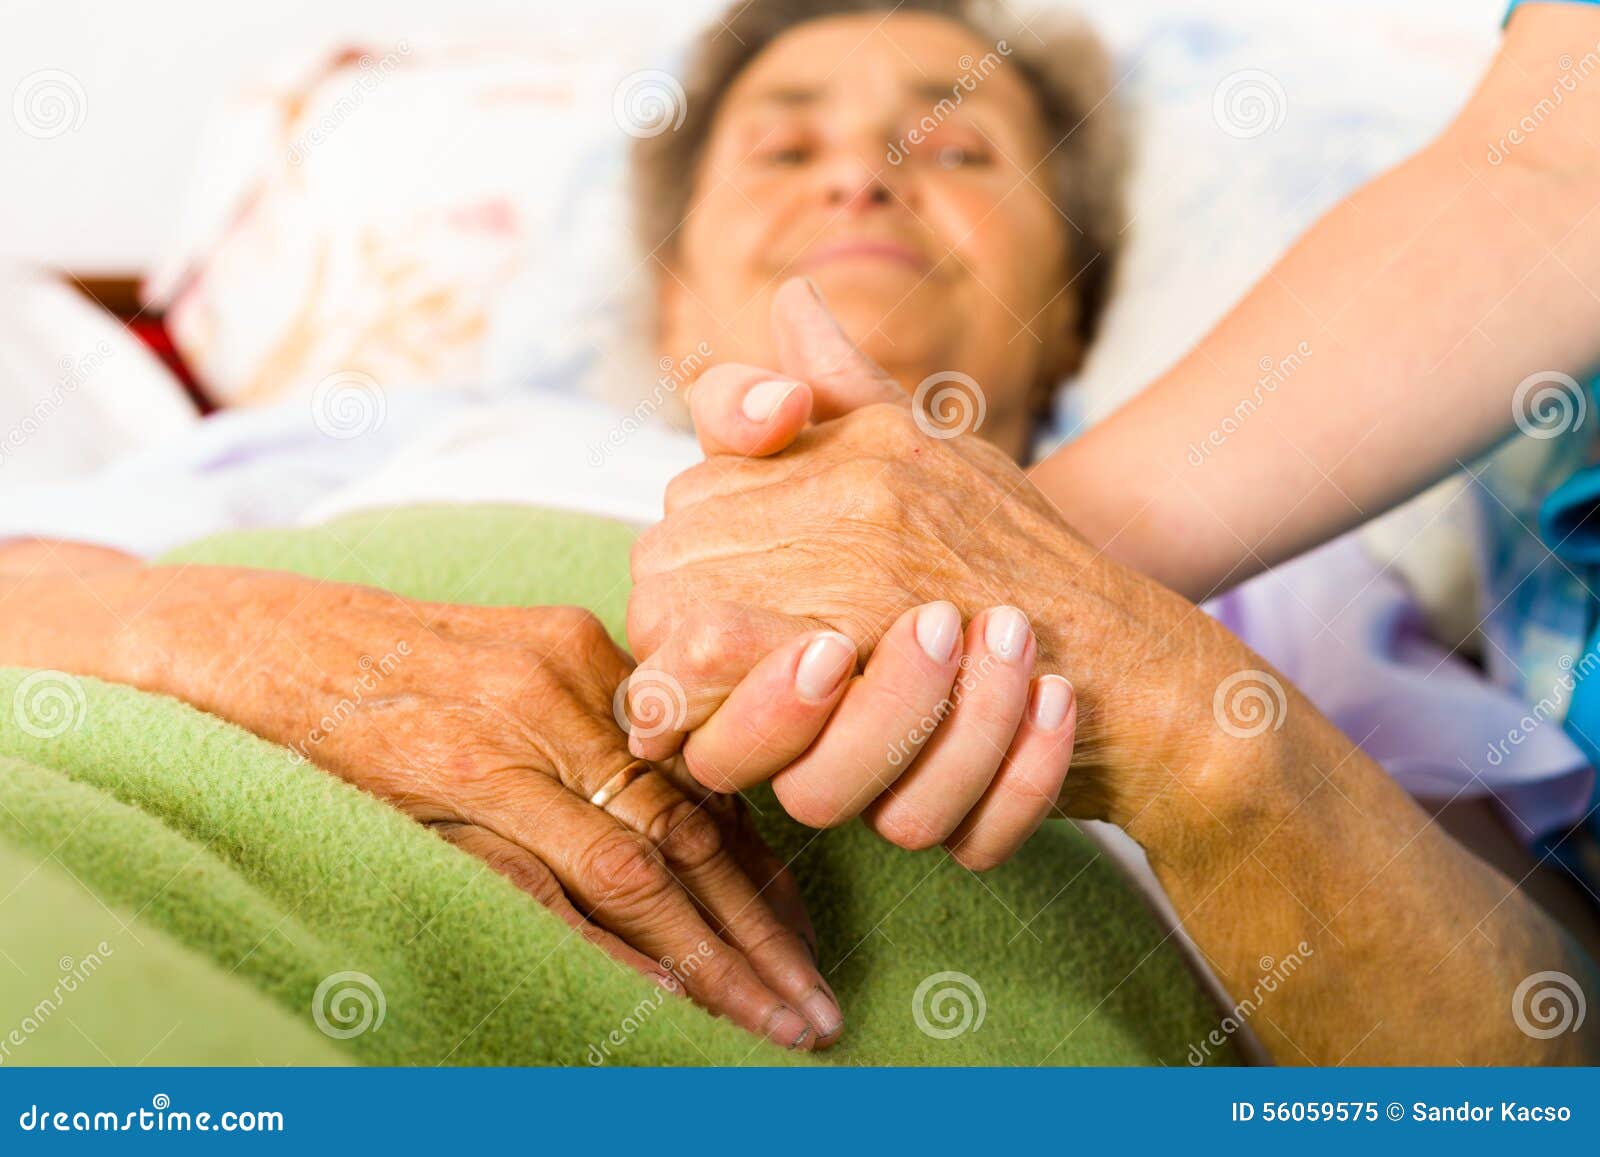 caring nurse holding hands